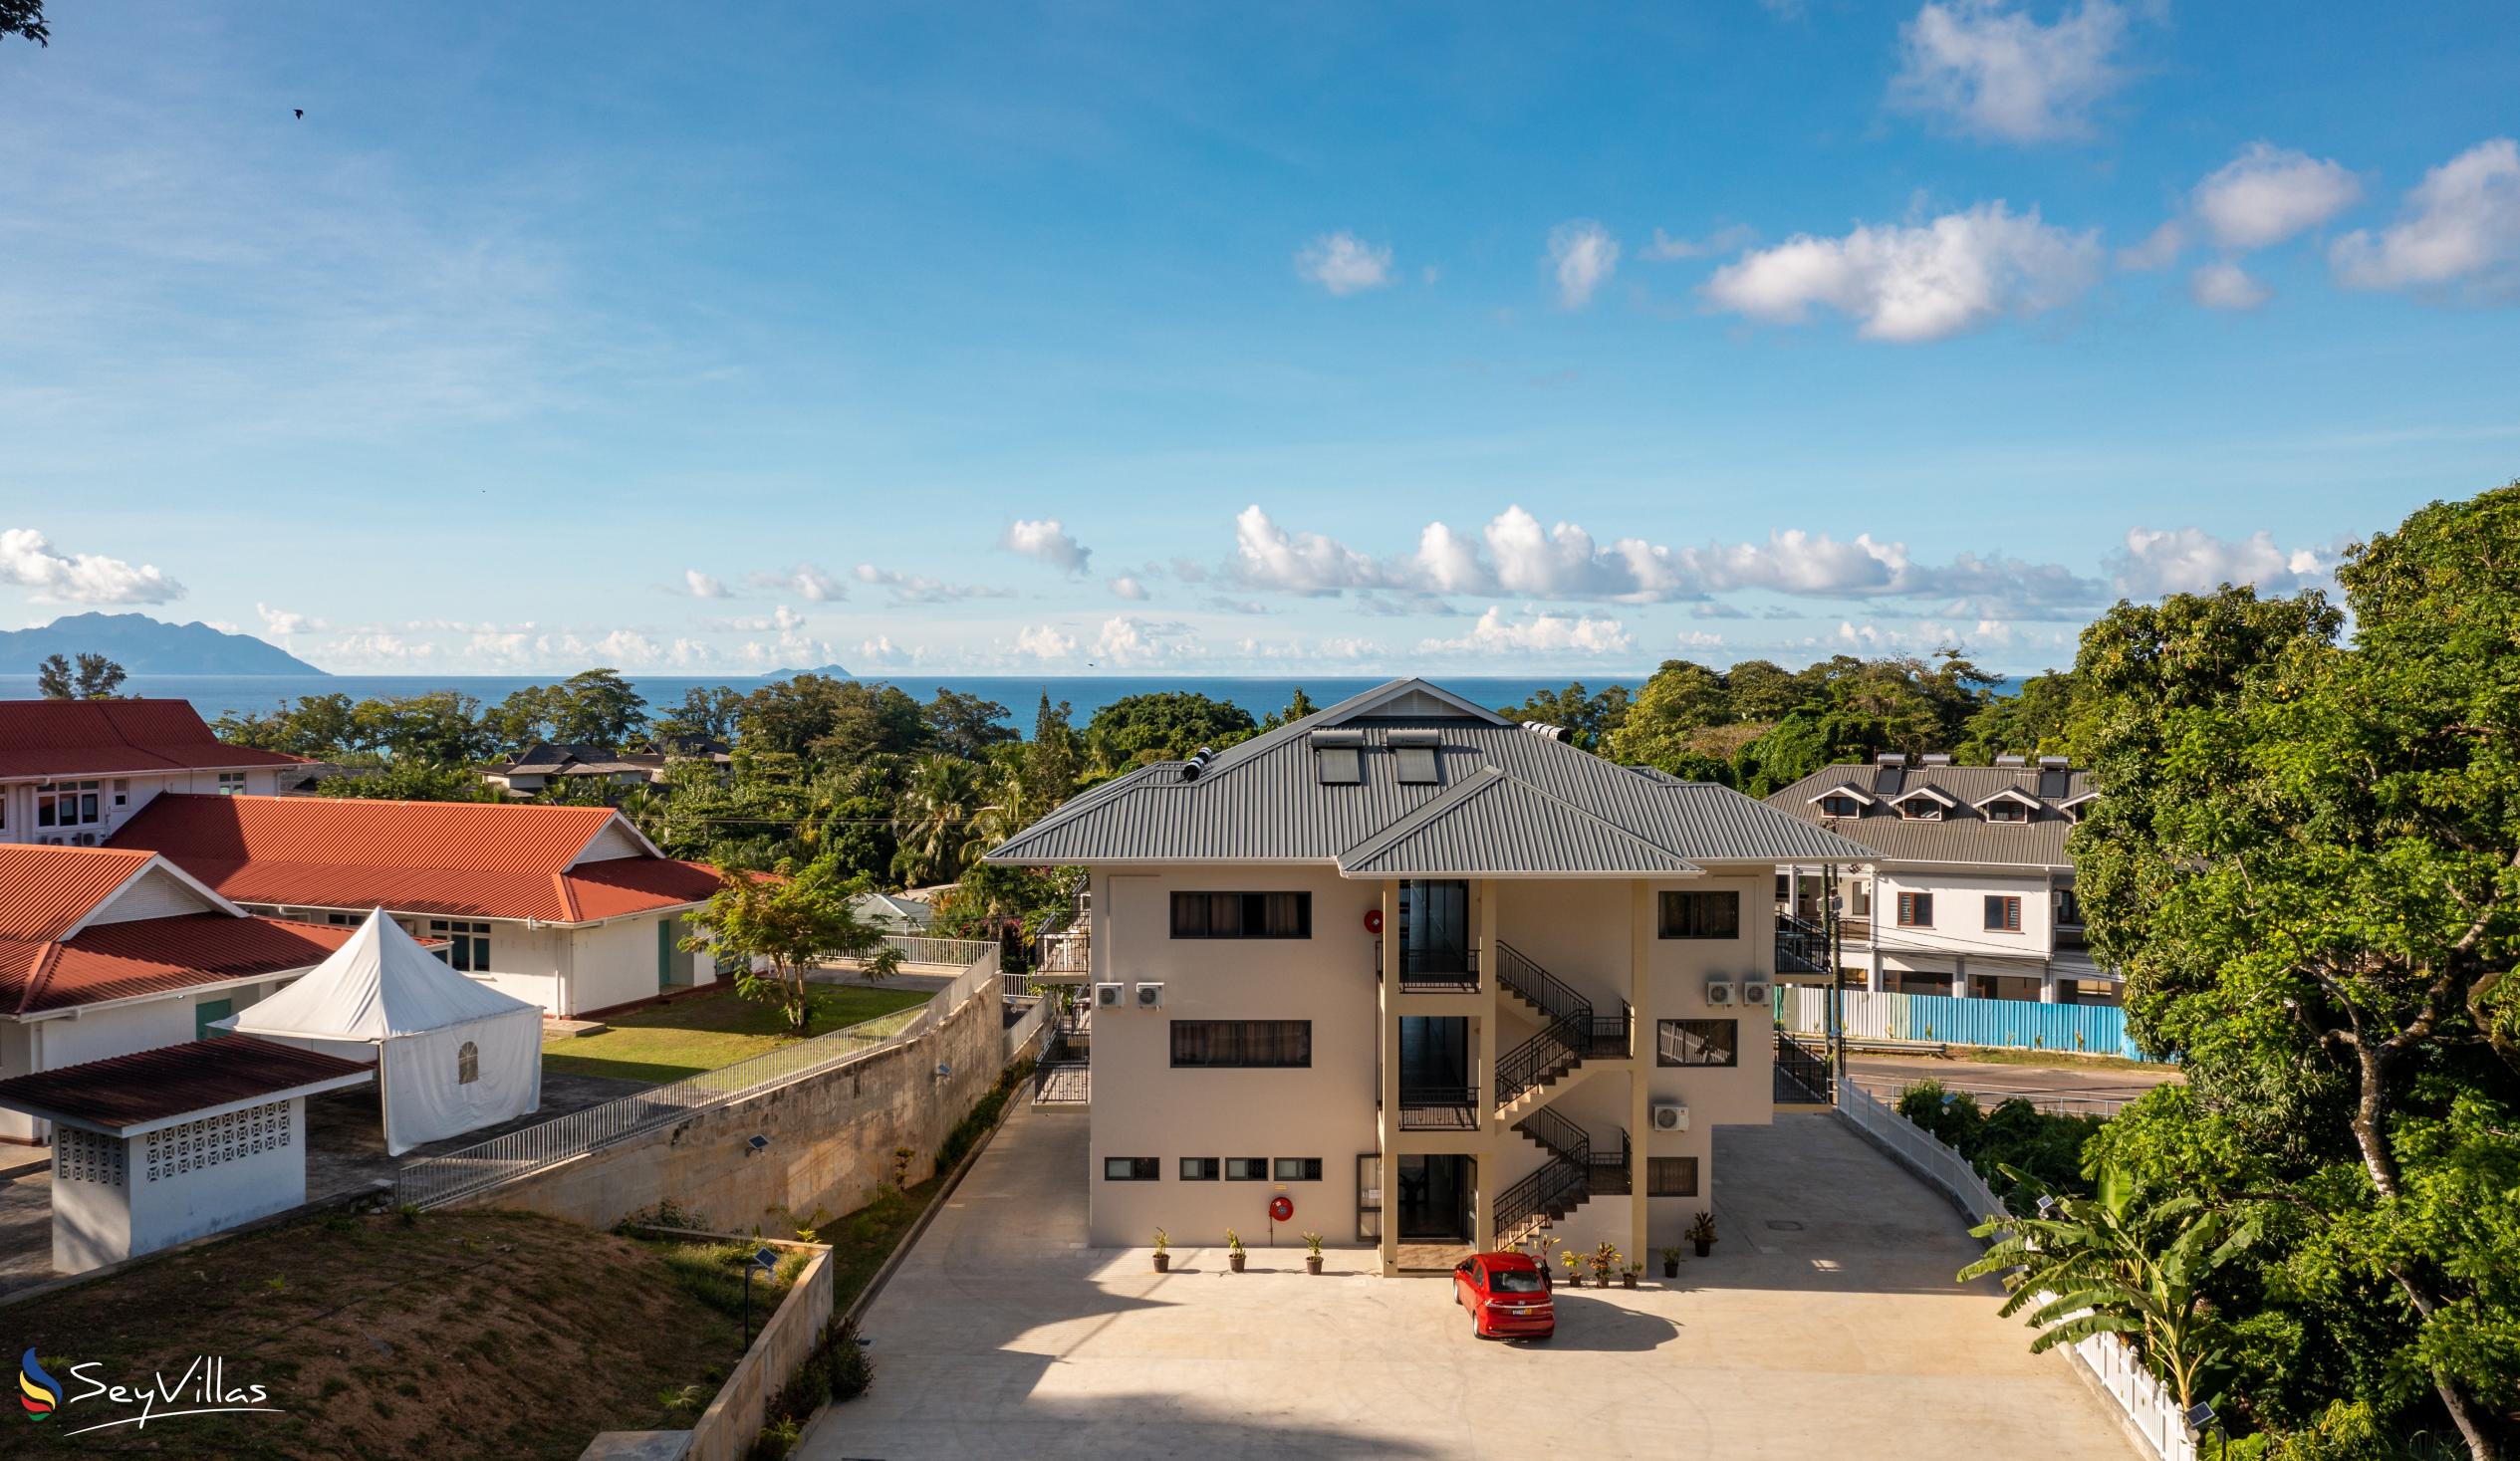 Foto 4: B Holiday Apartments - Aussenbereich - Mahé (Seychellen)